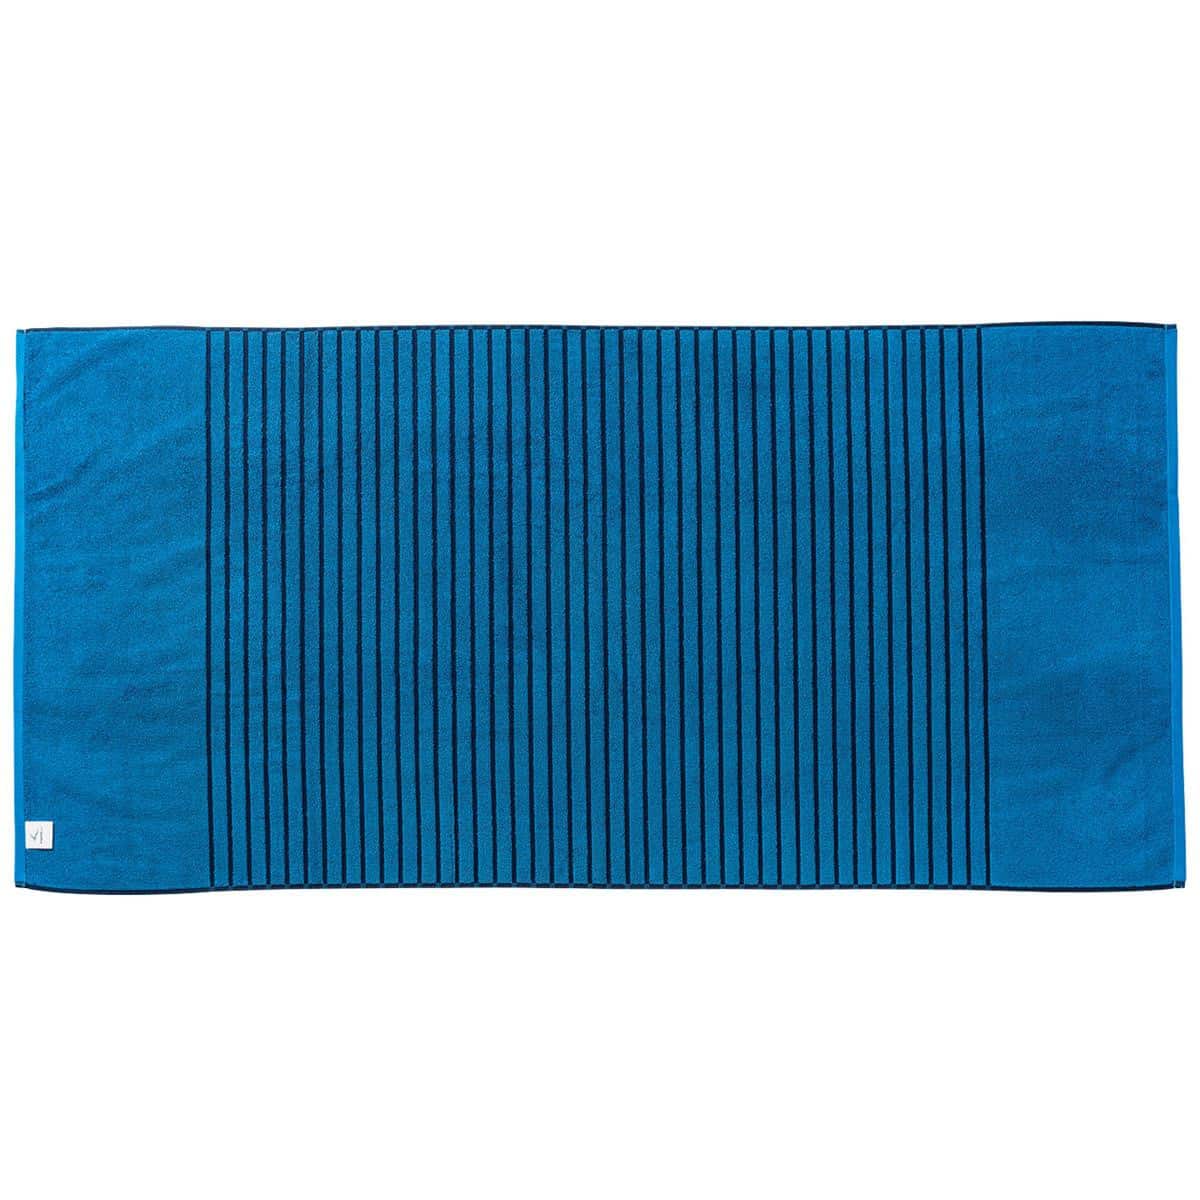 Navy/Aqua Reversible Two-Tone Beach Towel or Bath Towel